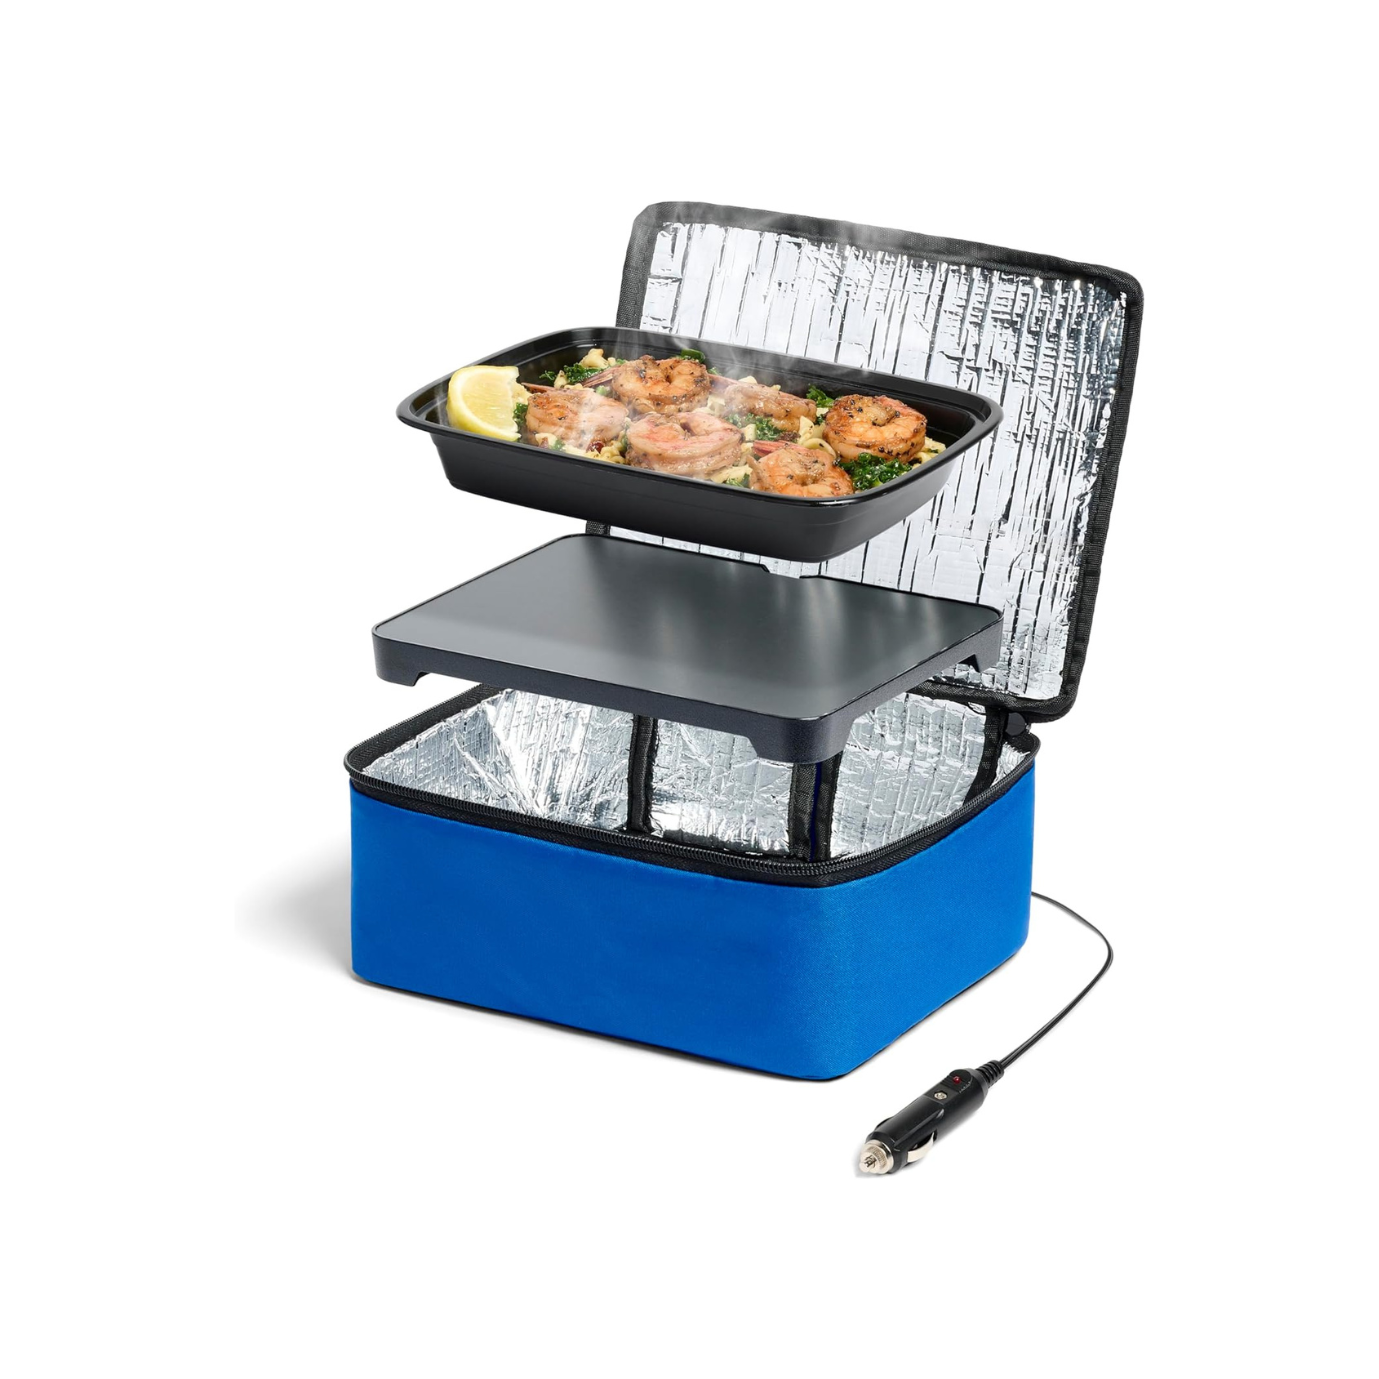 HotLogic Portable Food Heater